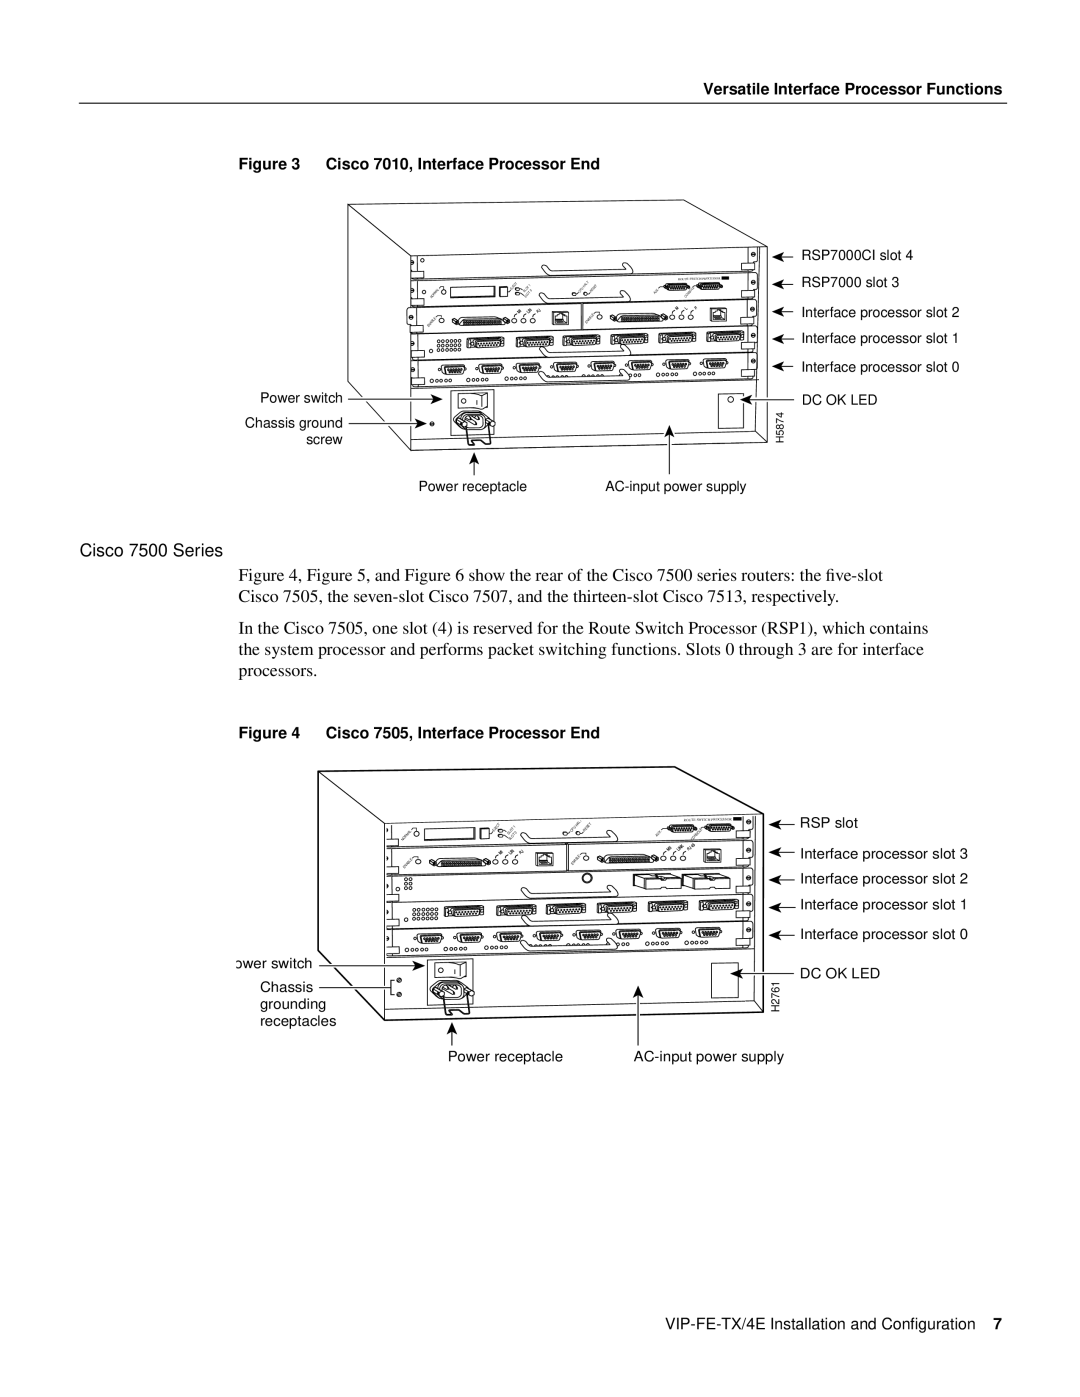 Cisco Systems VIP-FE-TX/4E manual Cisco 7500 Series, AC-input power supply 